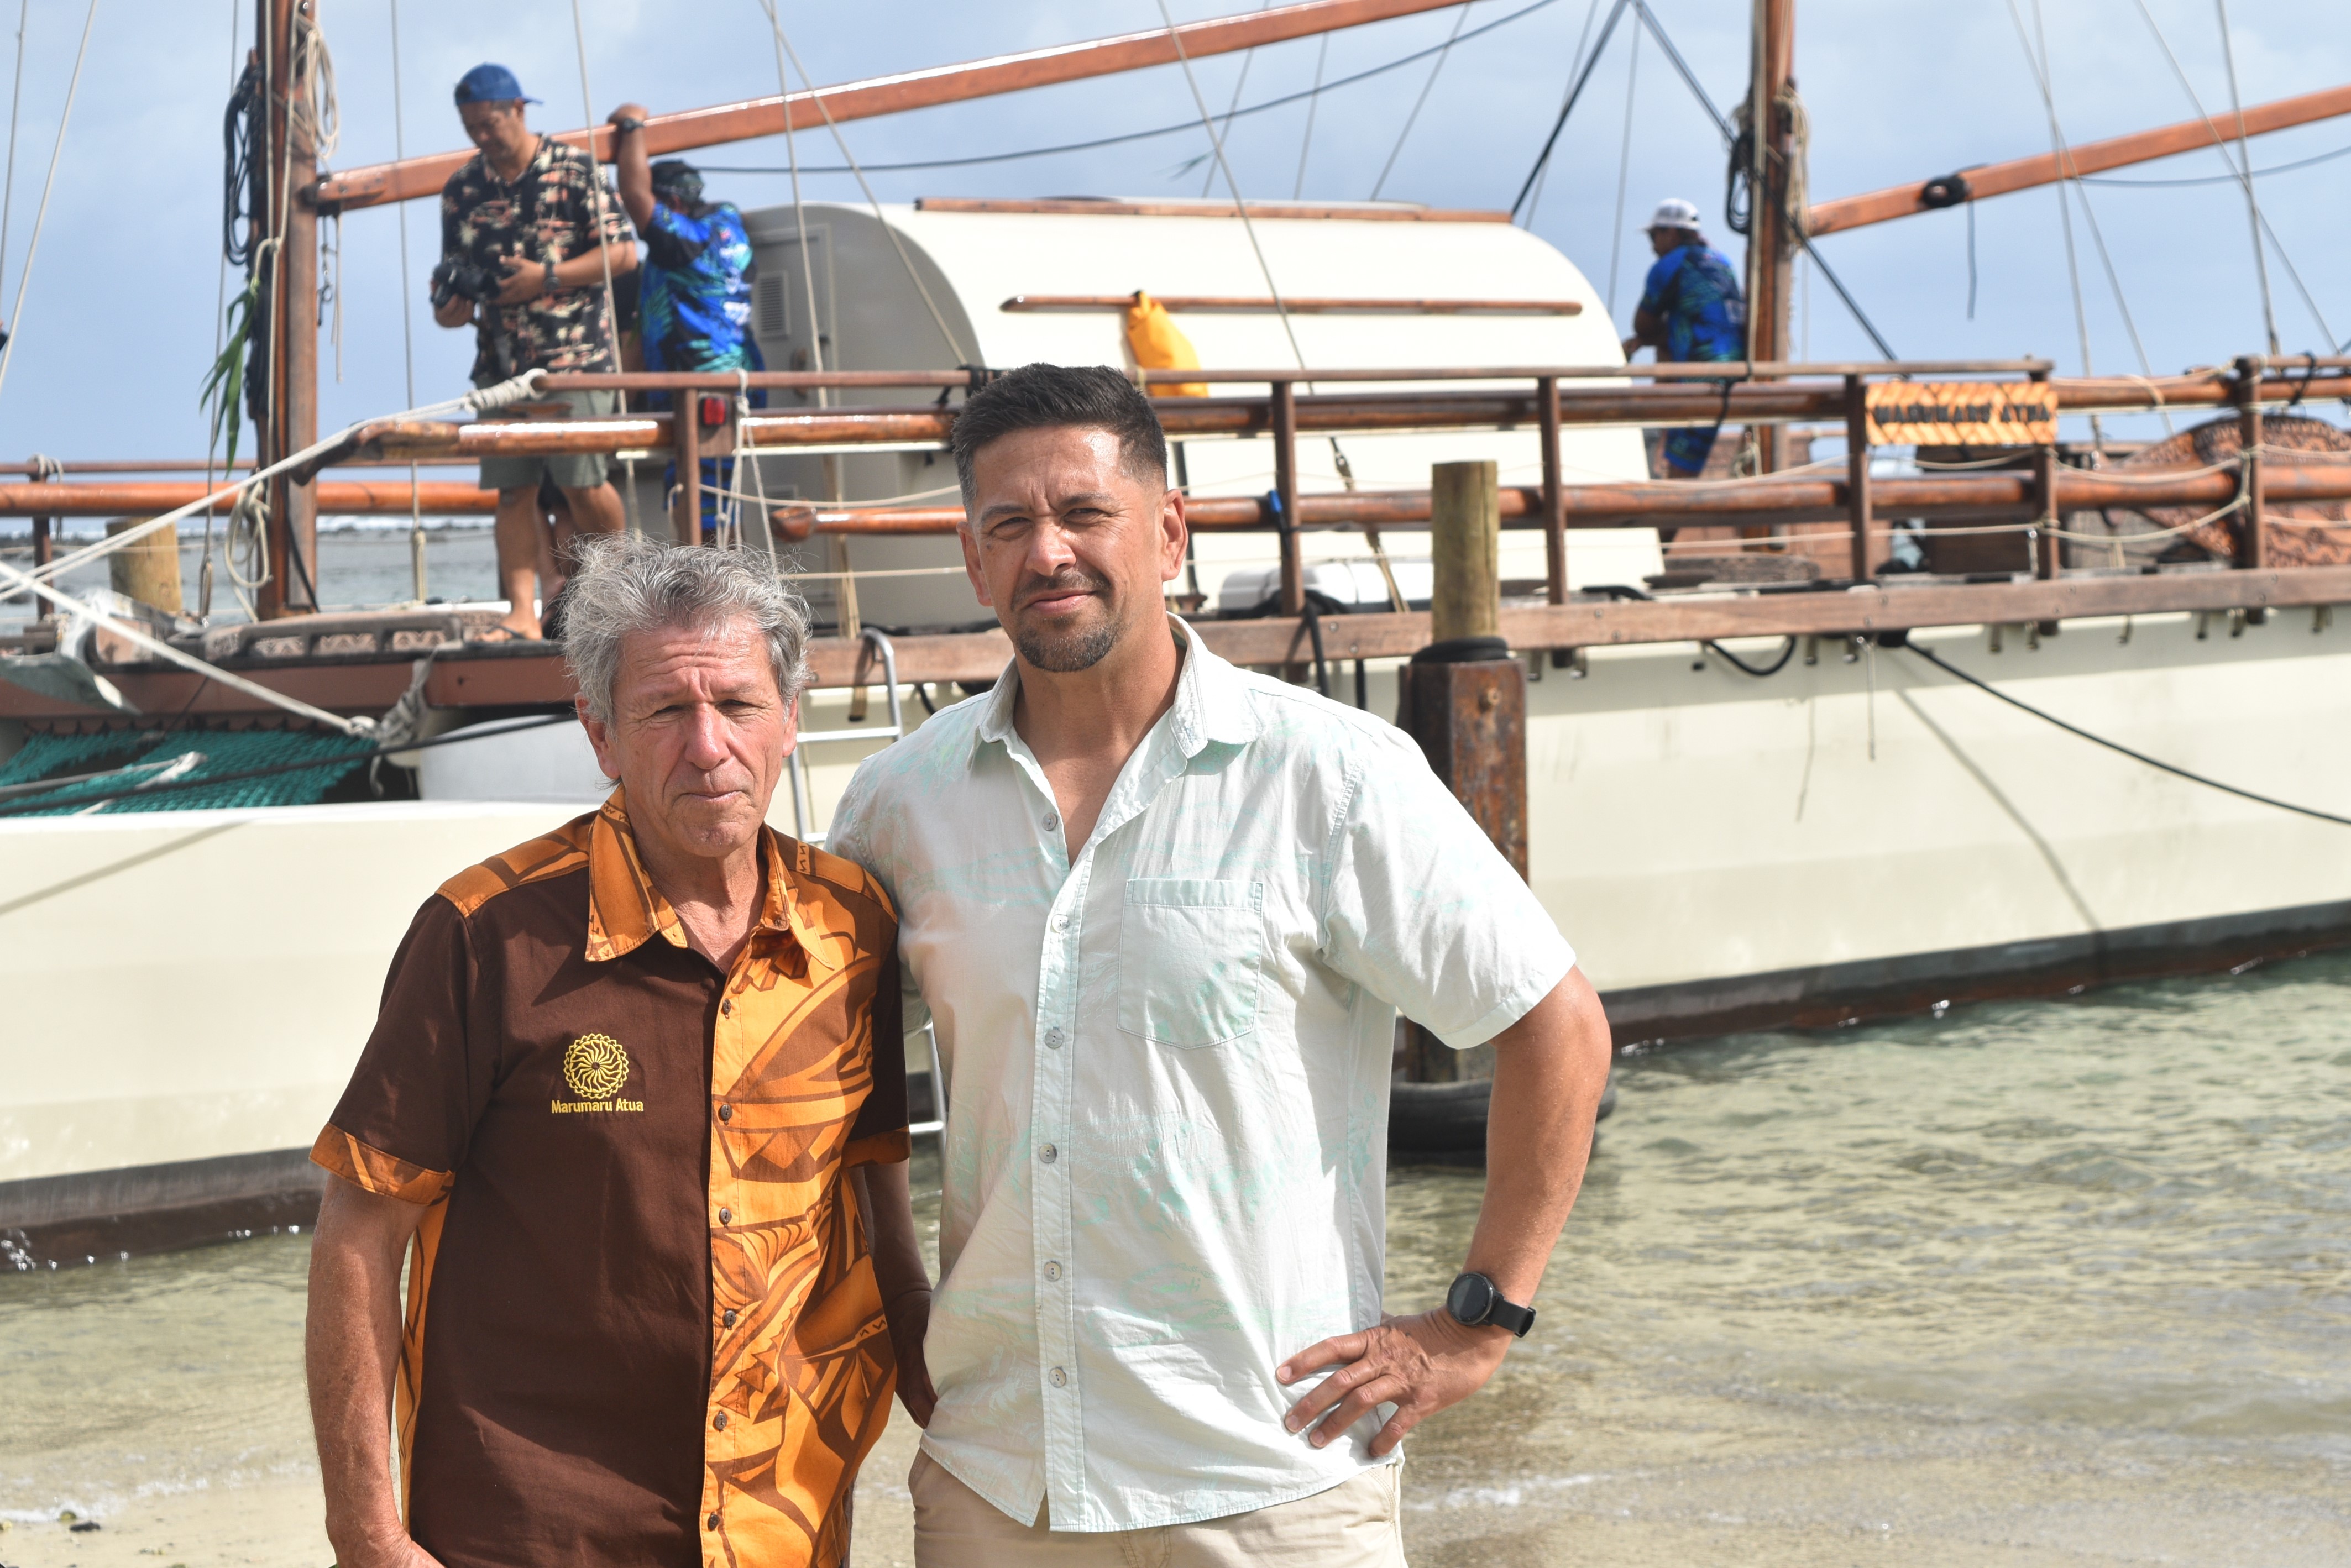 Cook Islander finds dream job on luxury yachts